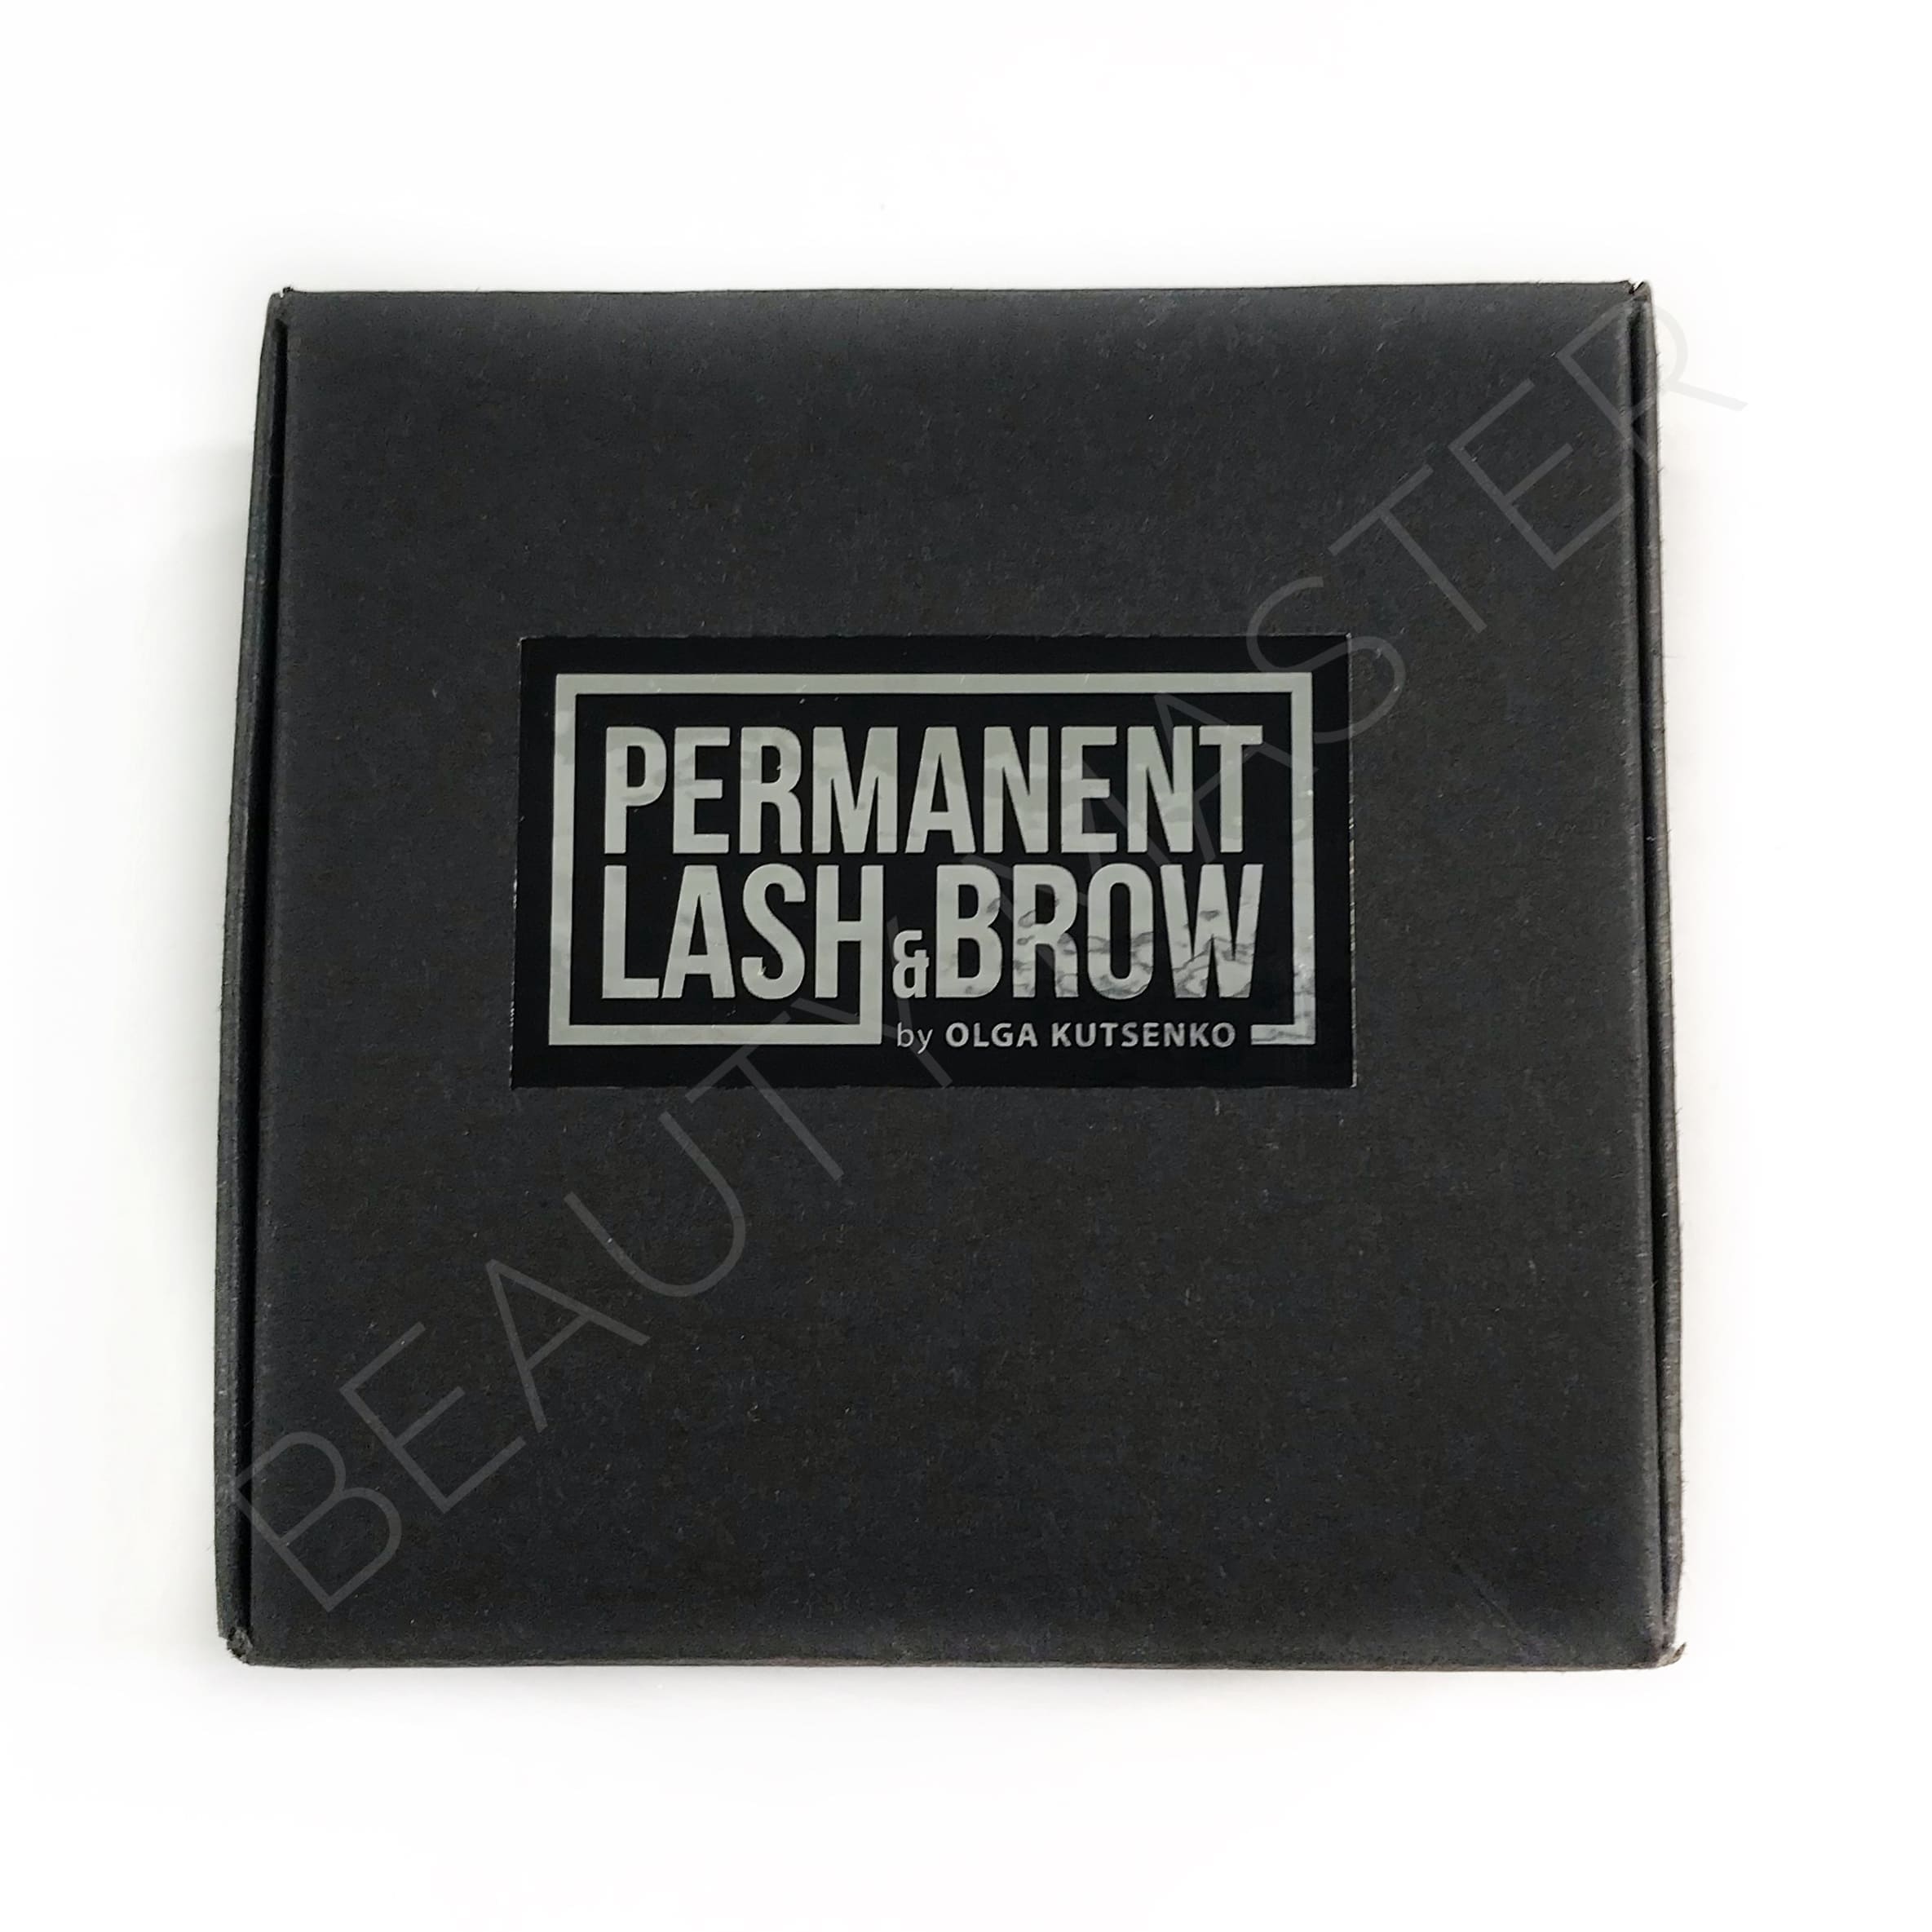 Permanent lash&brow Набор Хна для бровей 5шт 2,5г